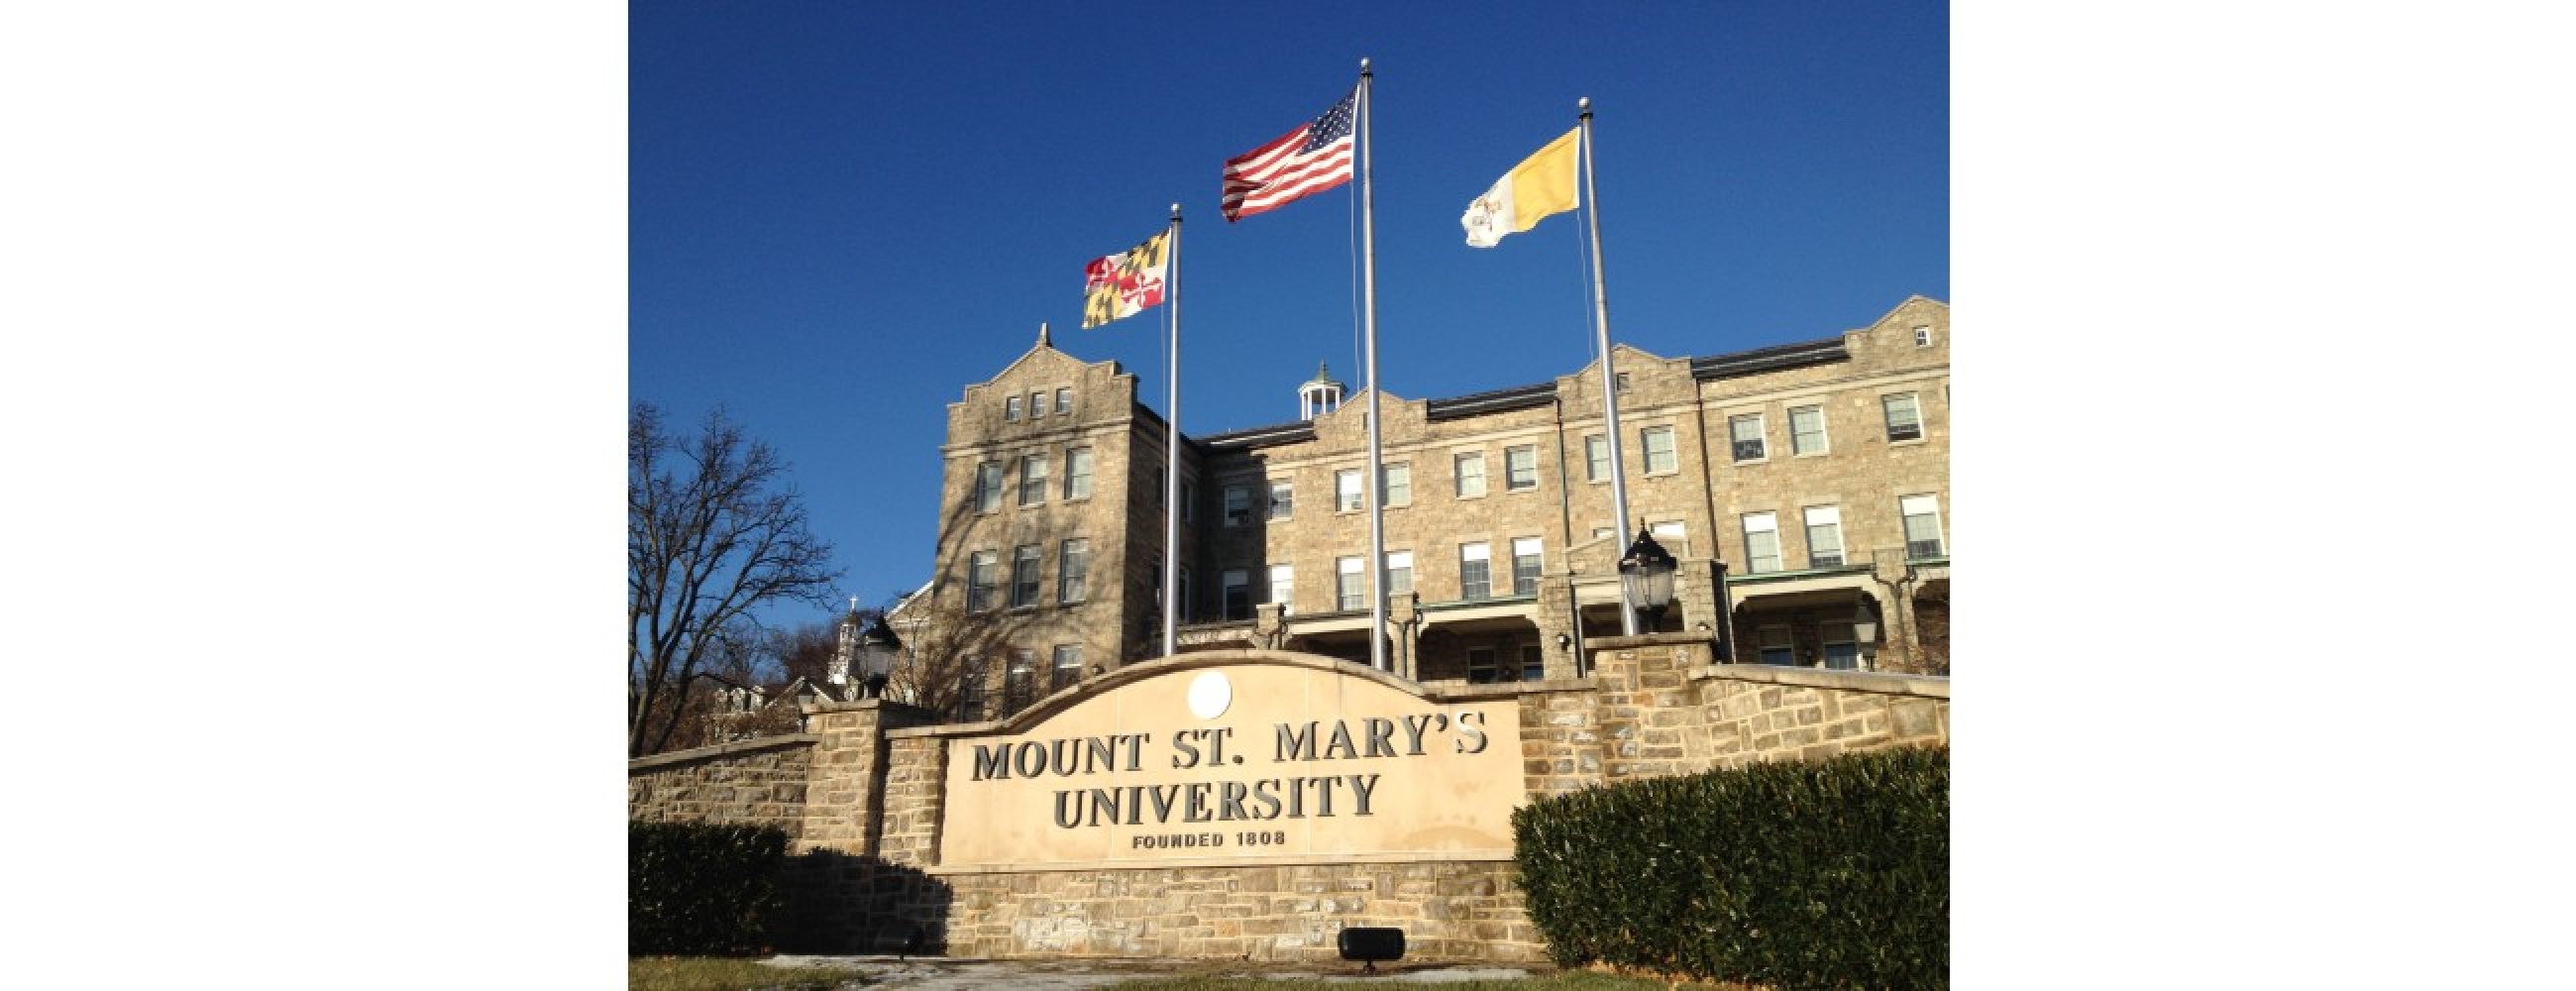 Mount St. Mary's University